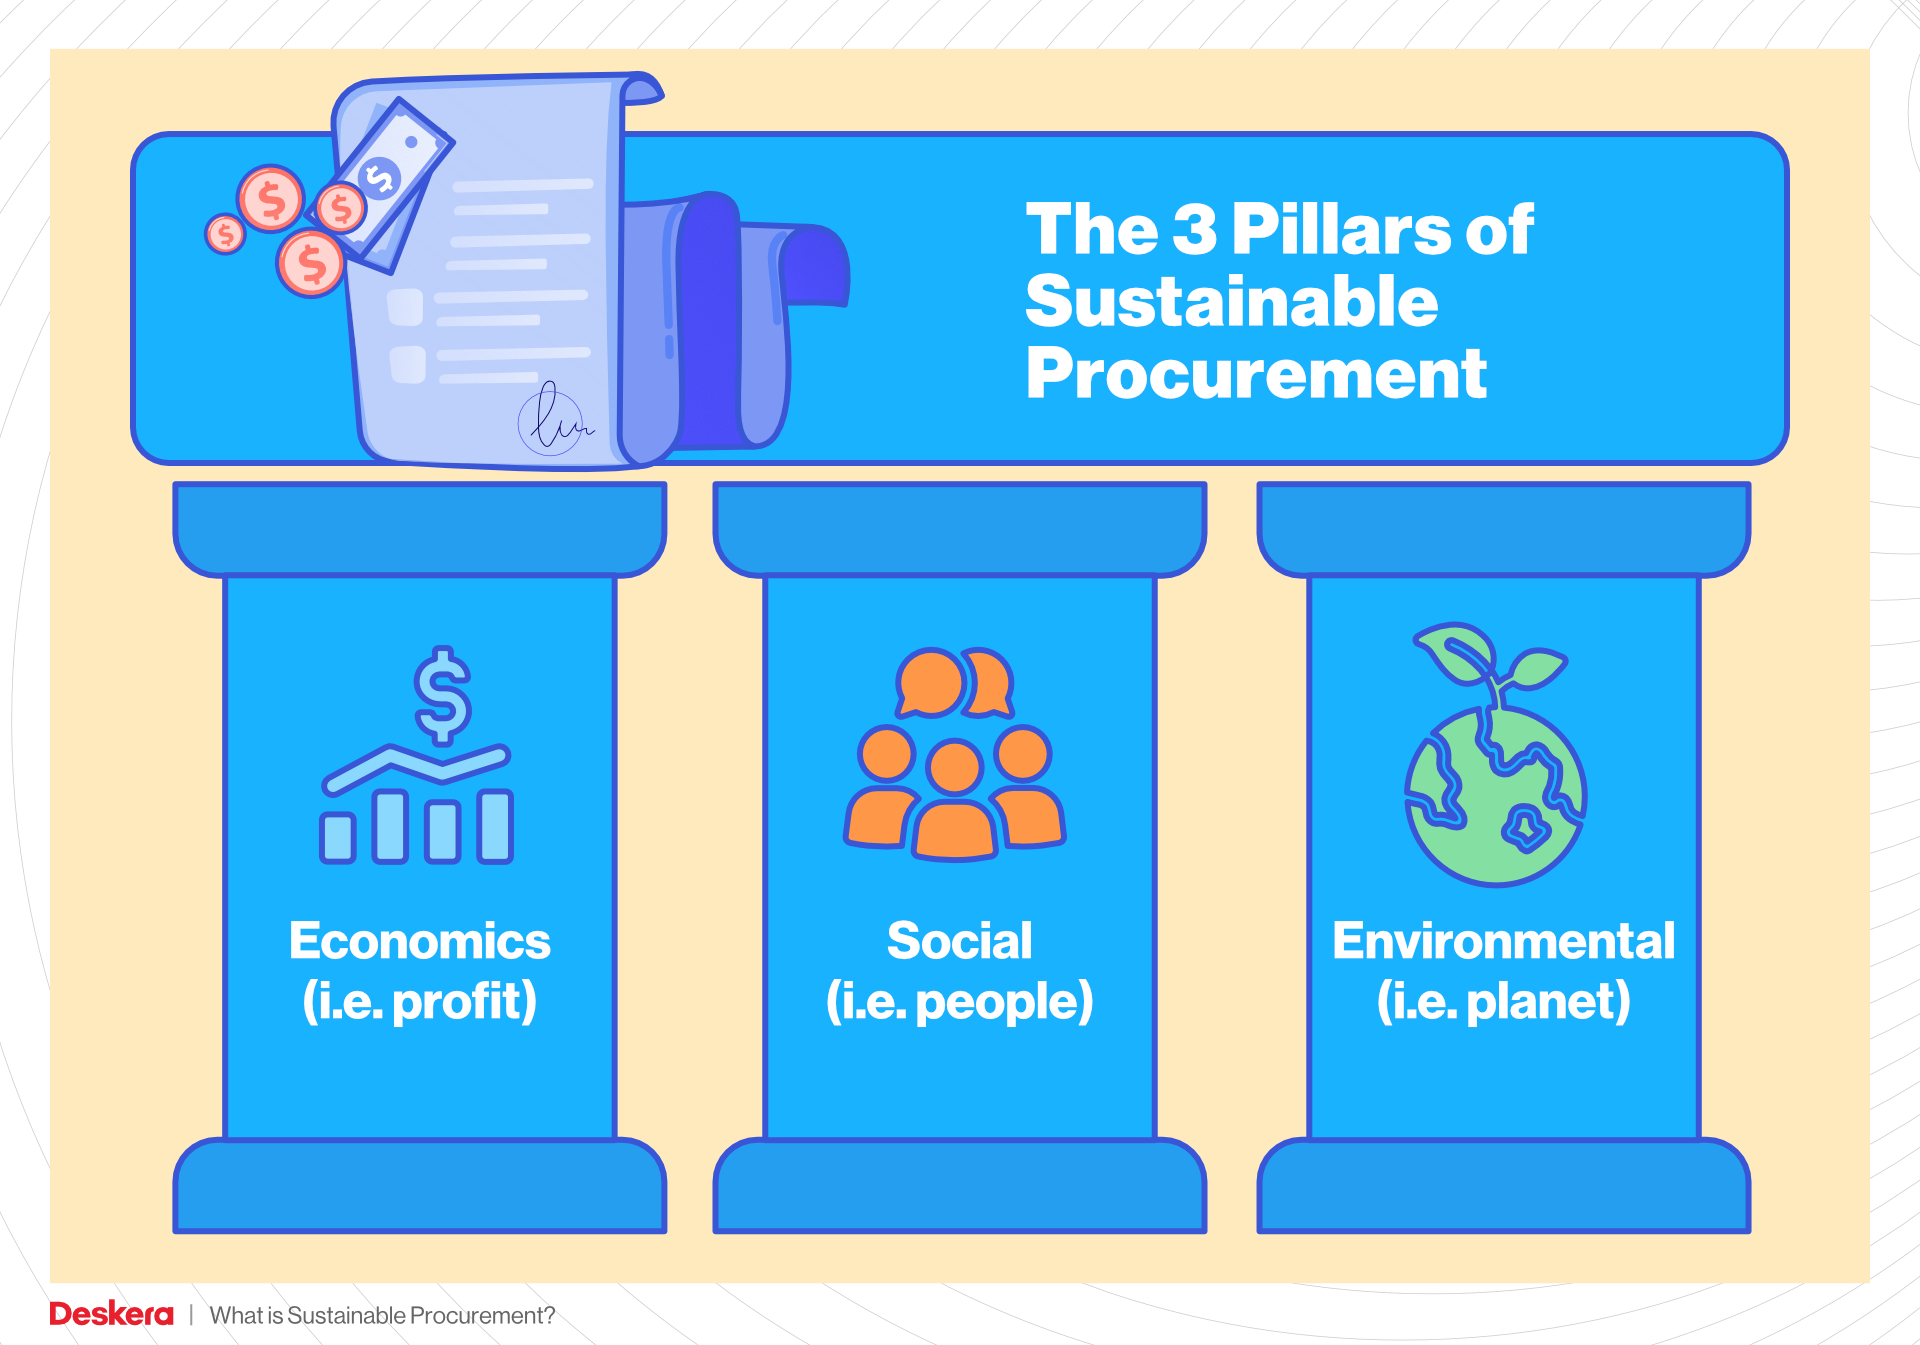 3 Pillars of Sustainable Procurement